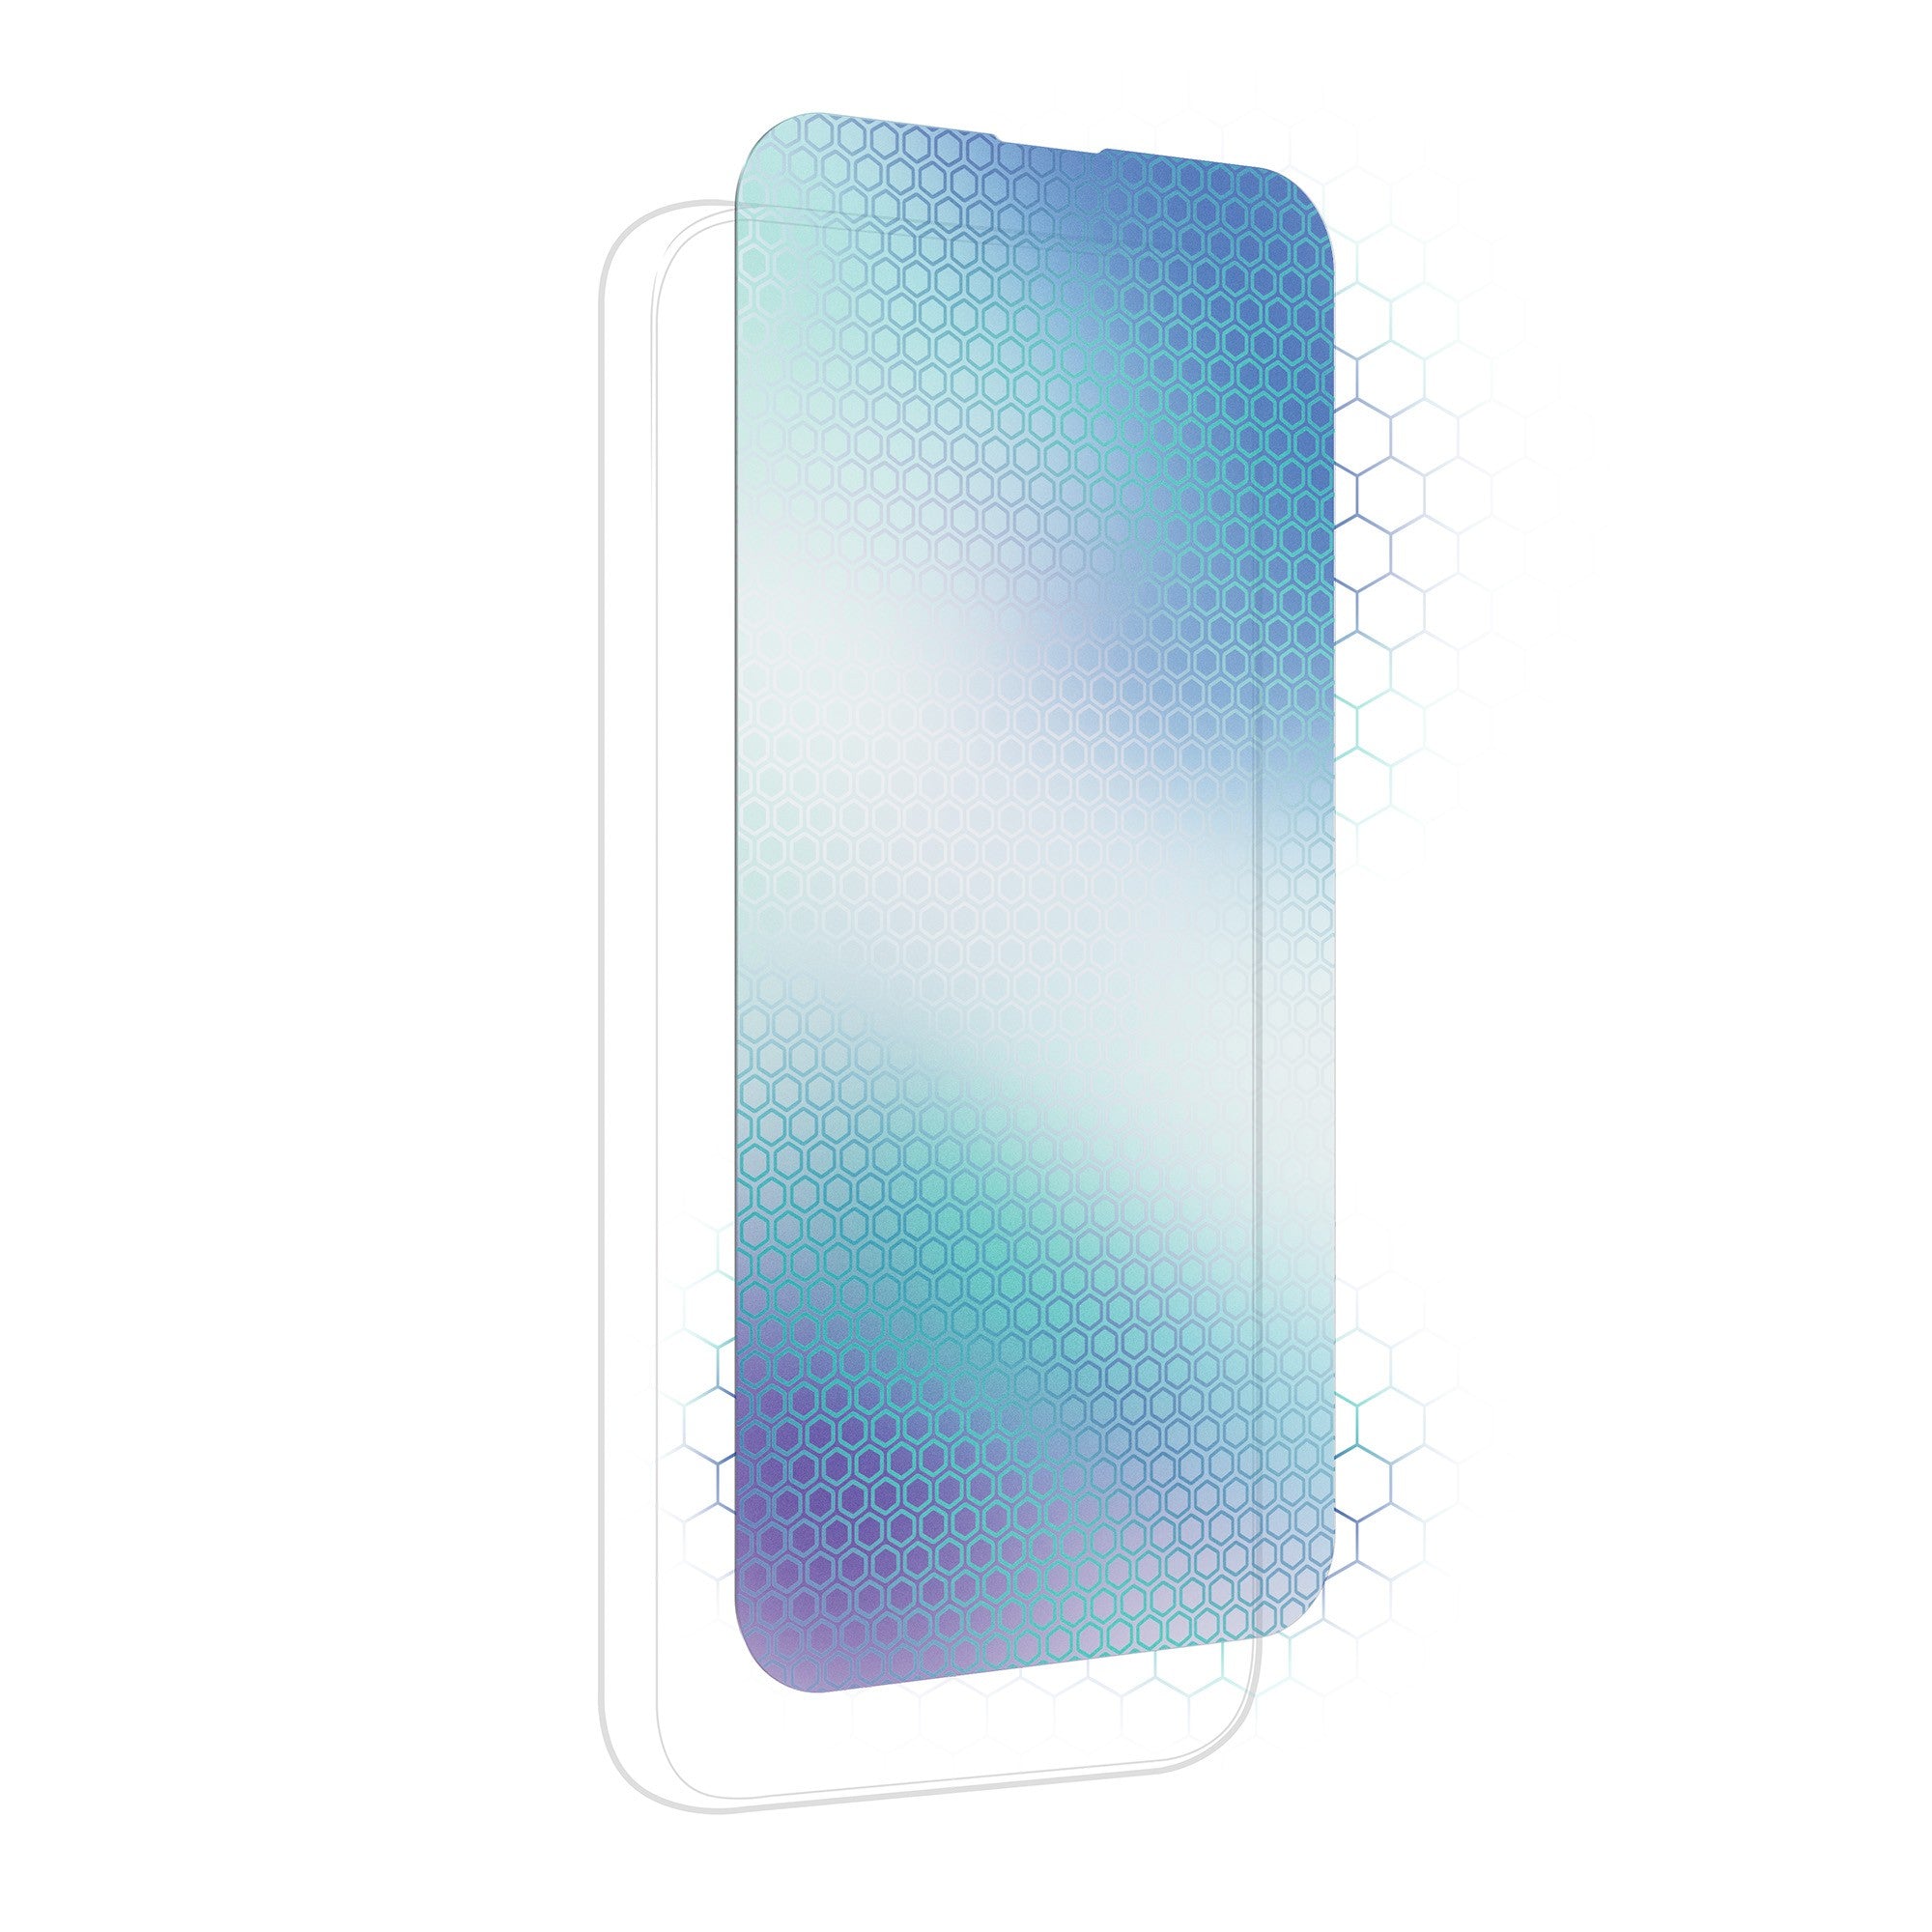 iPhone 14 Plus/13 Pro Max ZAGG InvisibleShield Glass XTR2 Screen Protector - 15-10498